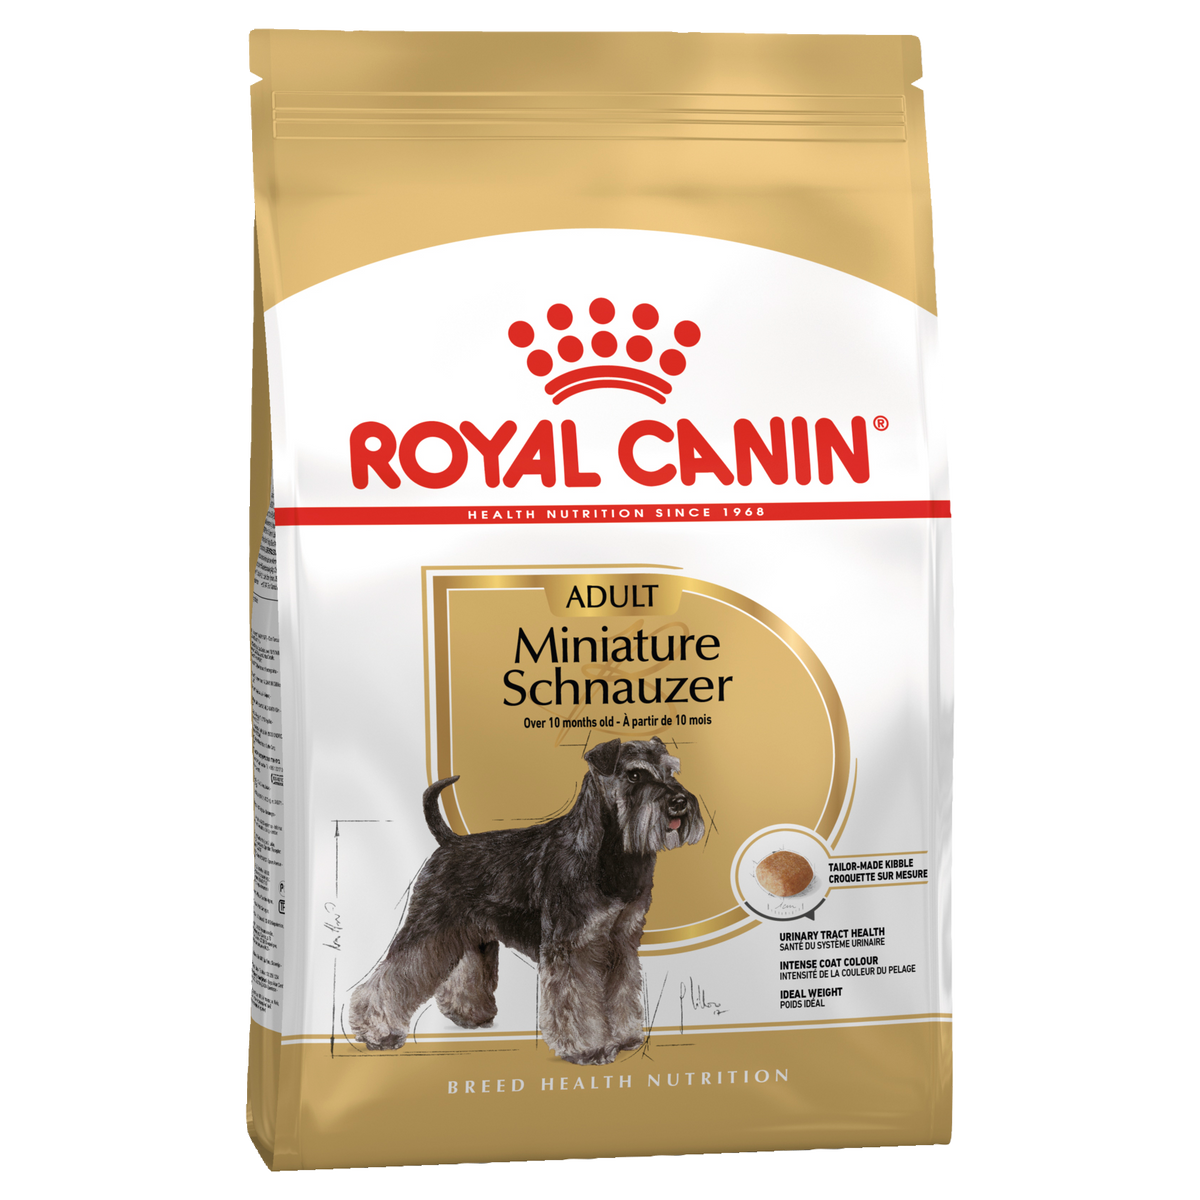 Royal Canin Miniature Schnauzer Adult 3kg